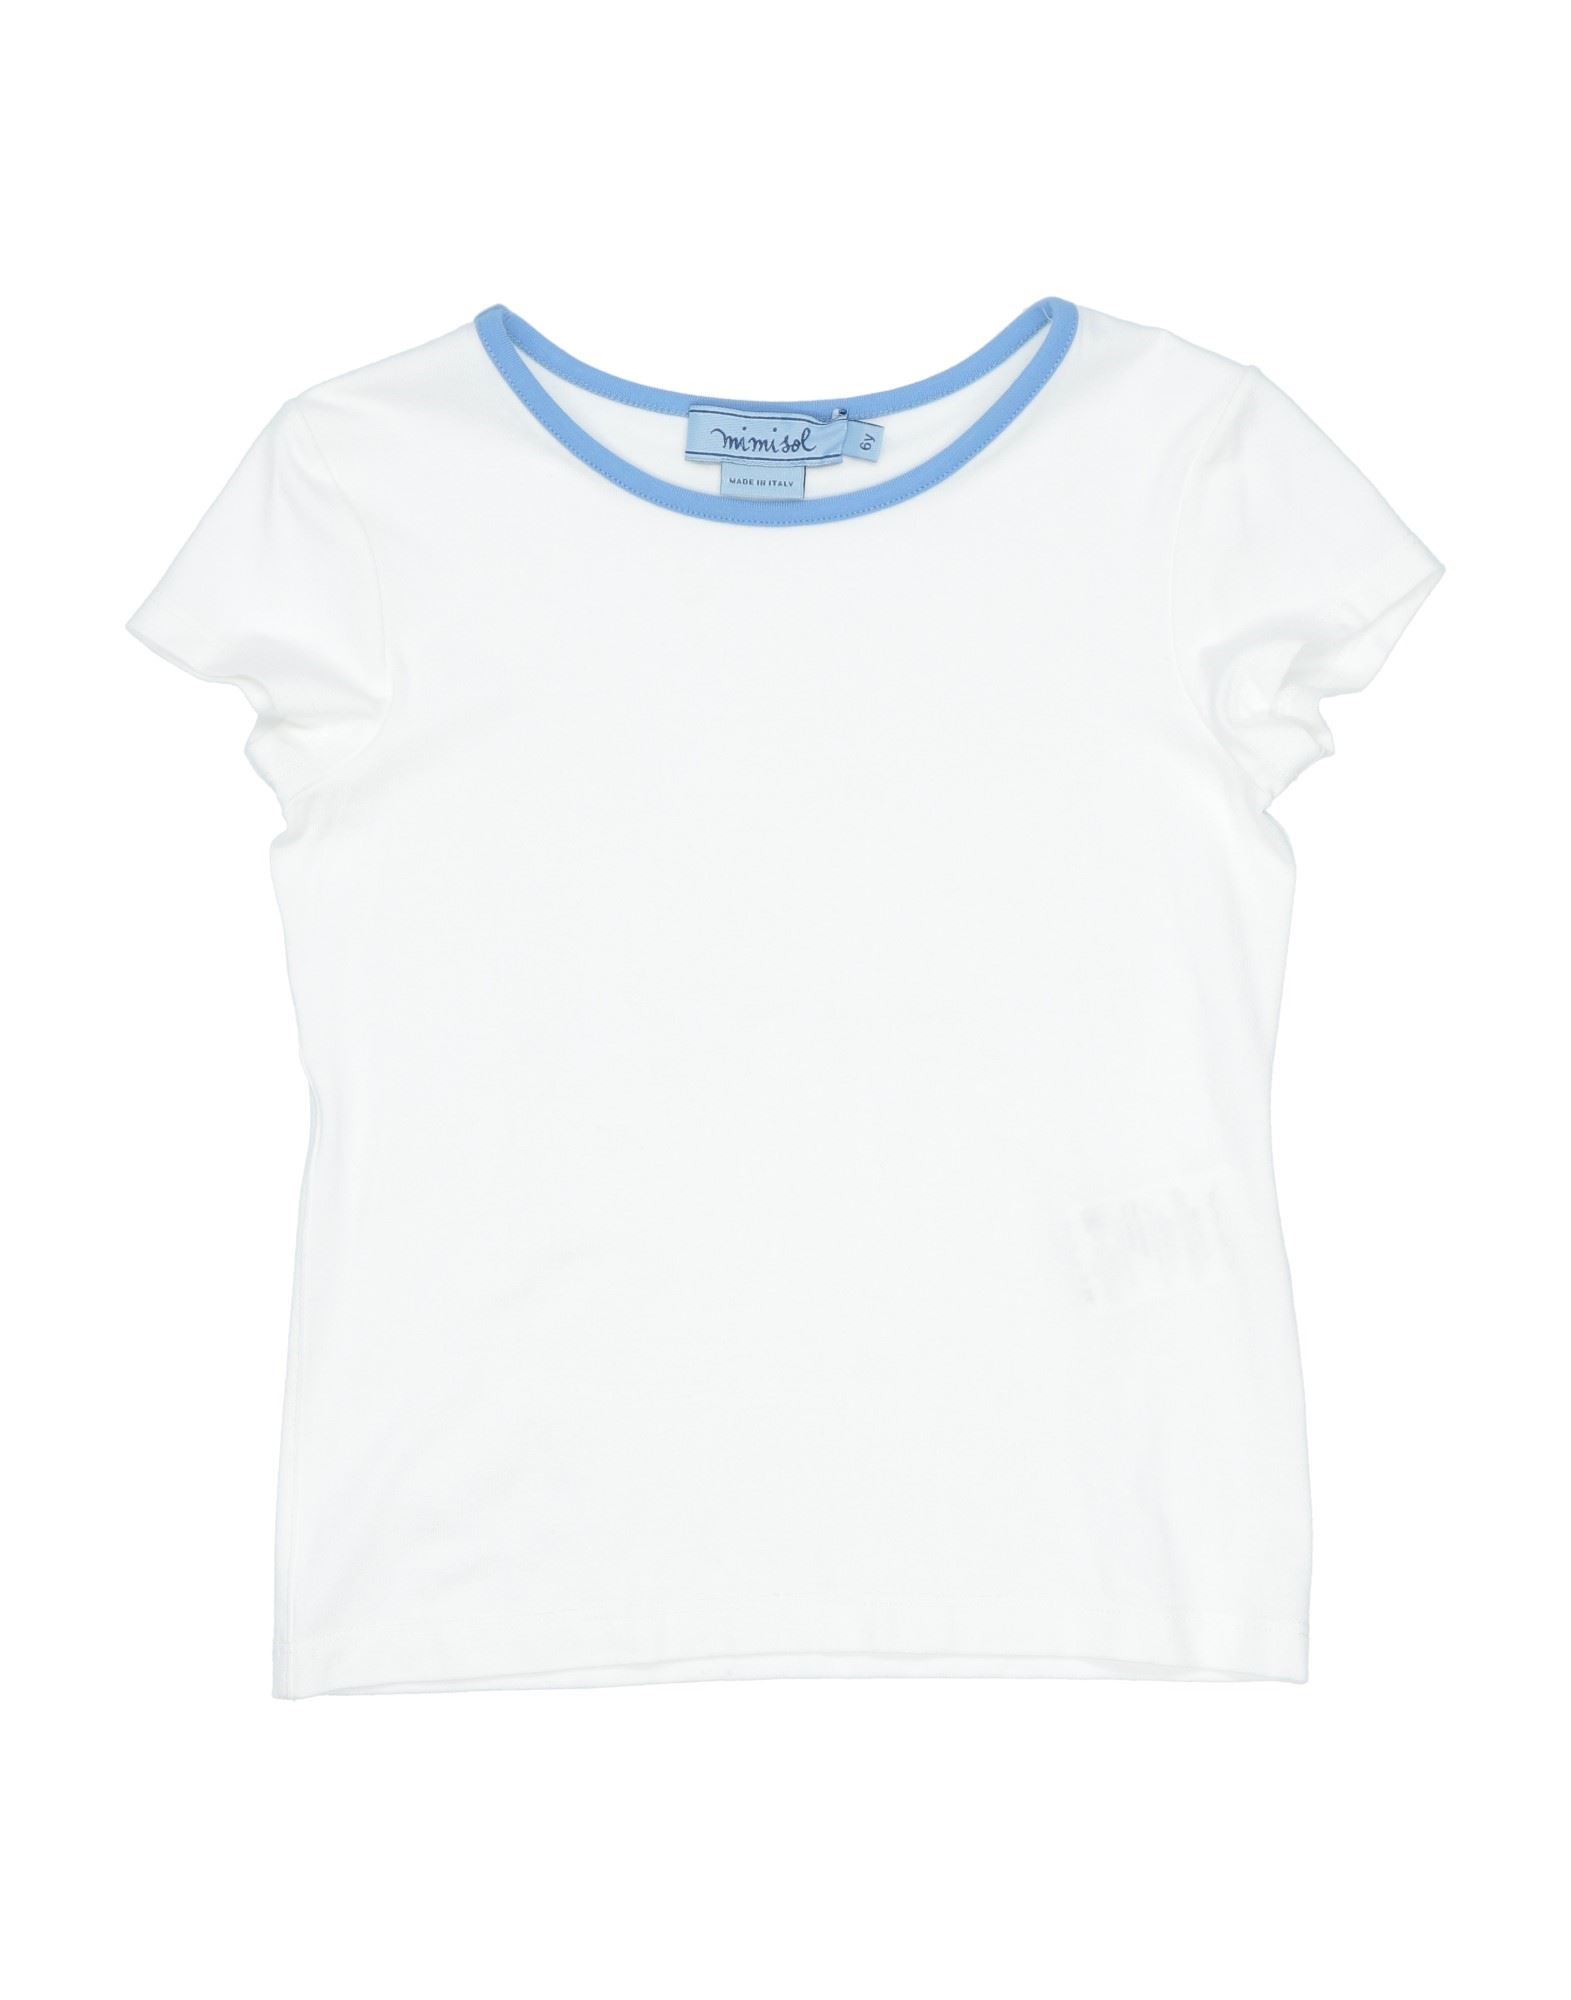 Mimisol Kids' T-shirts In White